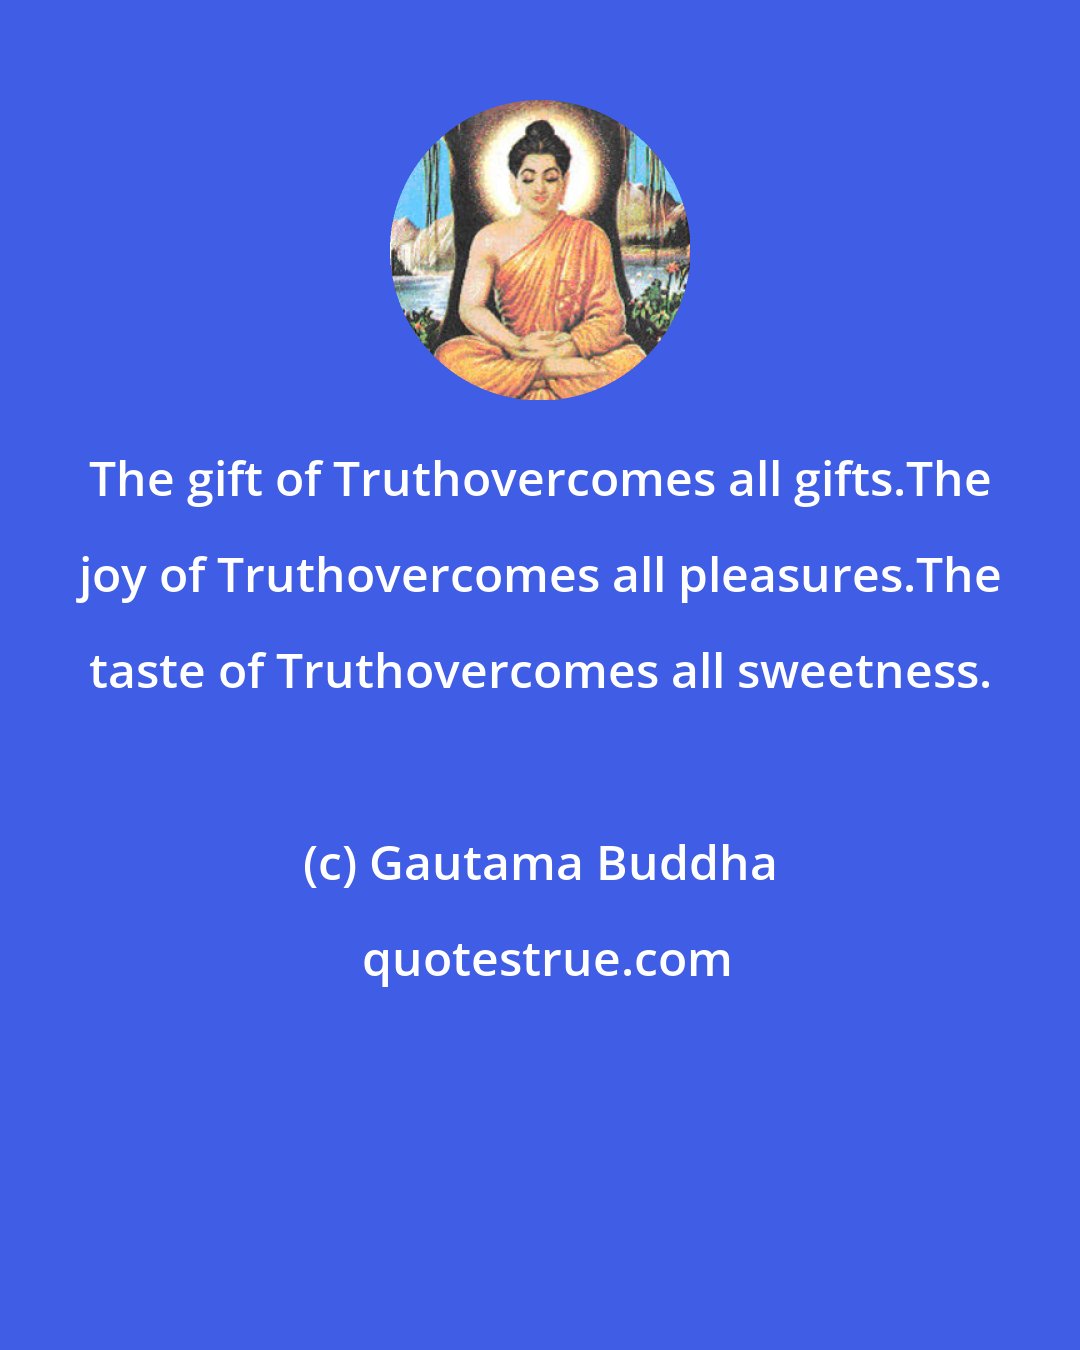 Gautama Buddha: The gift of Truthovercomes all gifts.The joy of Truthovercomes all pleasures.The taste of Truthovercomes all sweetness.